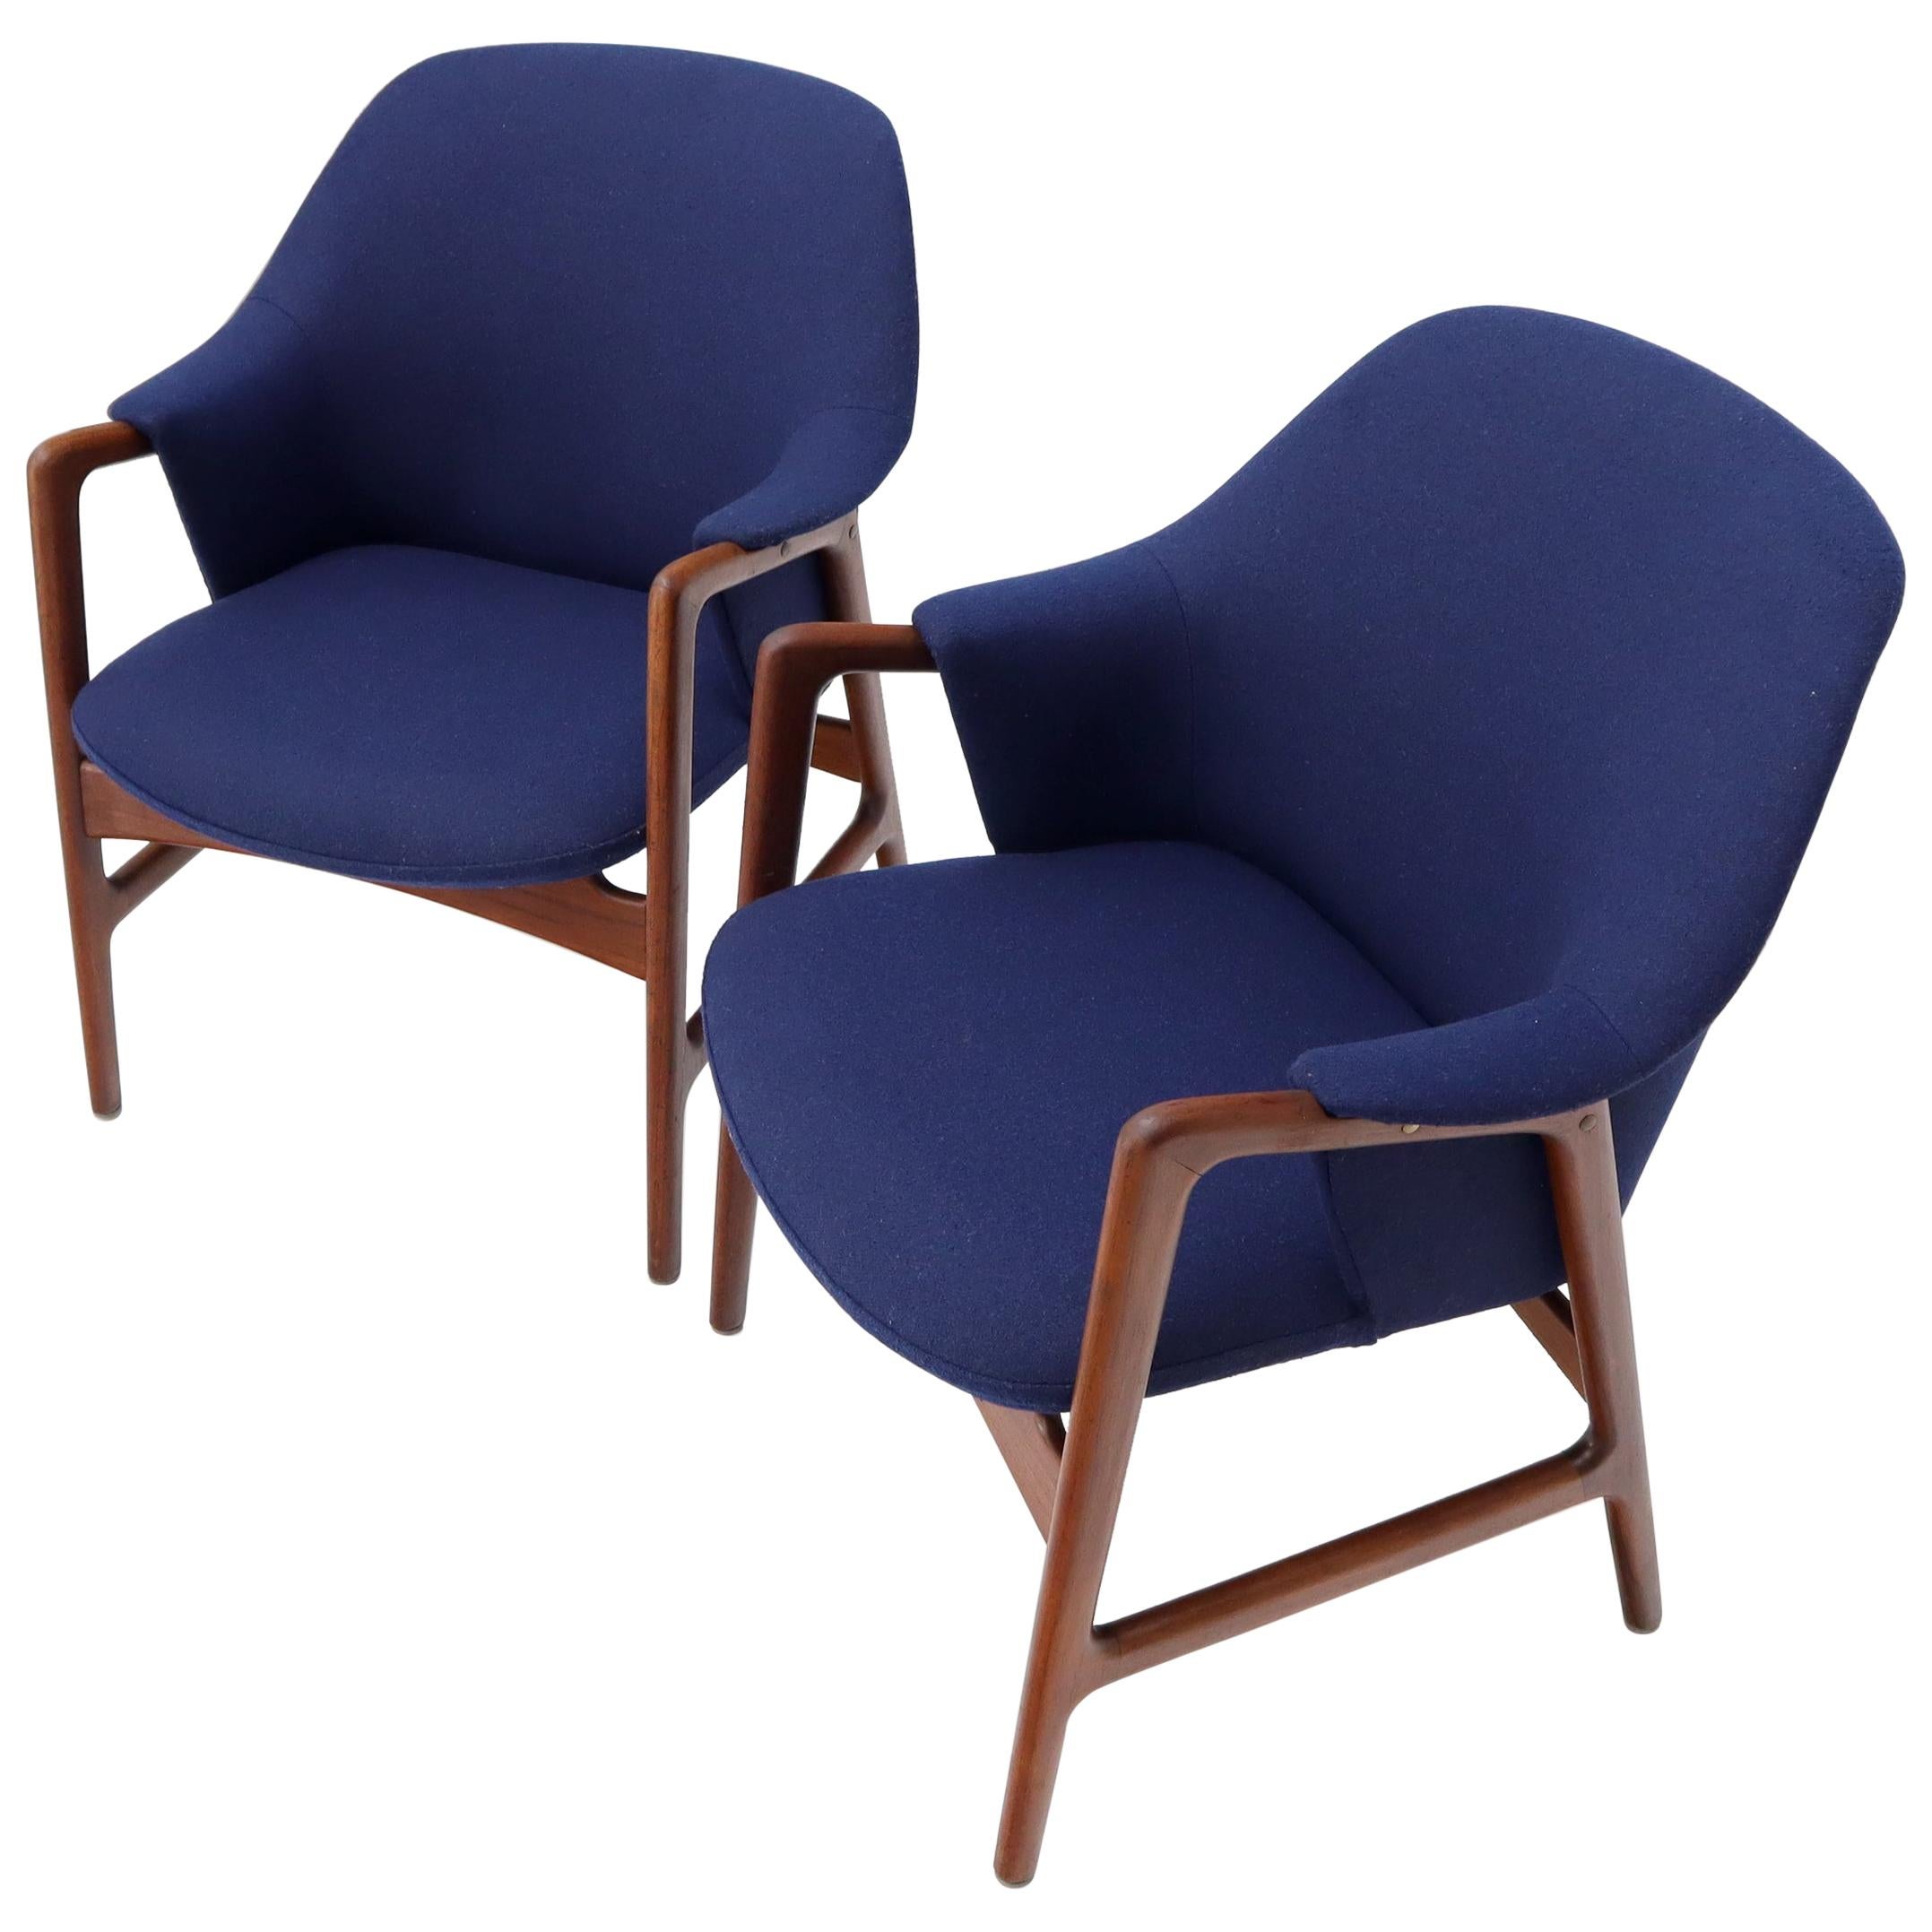 New Blue Wool Upholstery Teak Frames Danish Mid-Century Modern Lounge Chairs